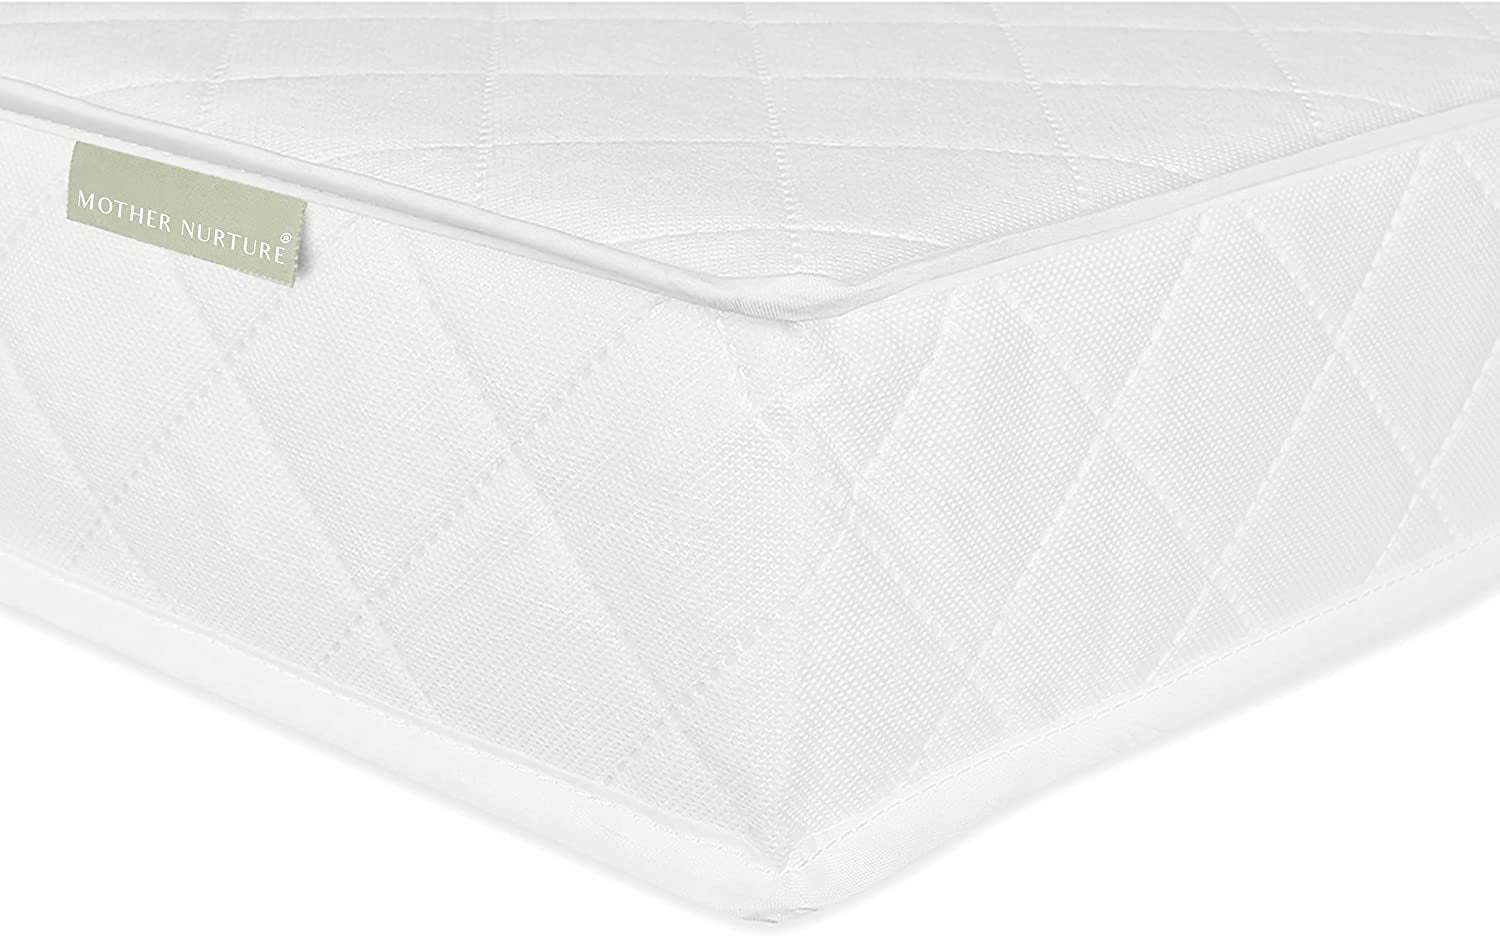 Mother Nurture Classic Spring Cot Bed Mattress, White, 140 x 70 x 10cm